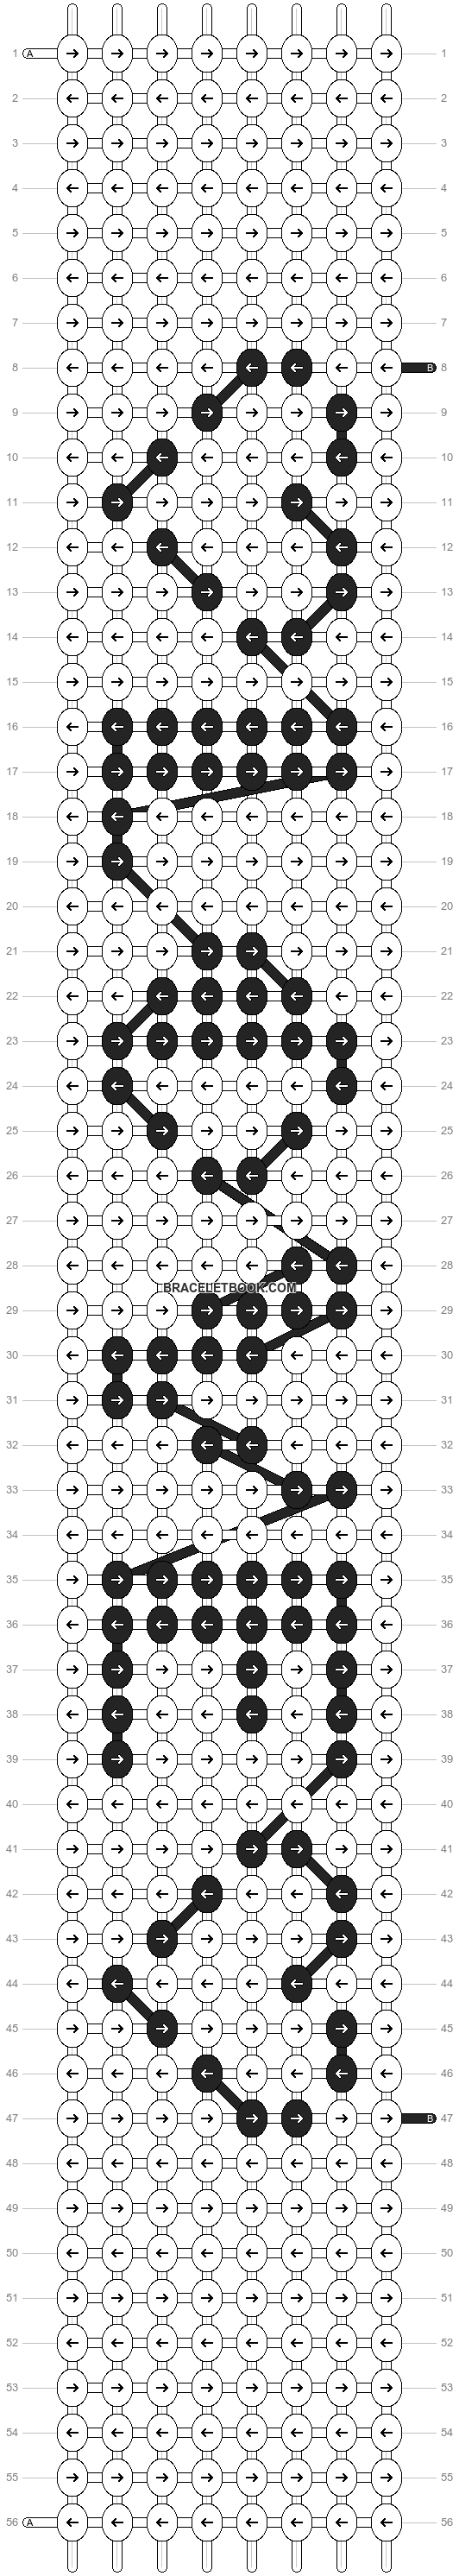 Alpha pattern #1260 pattern